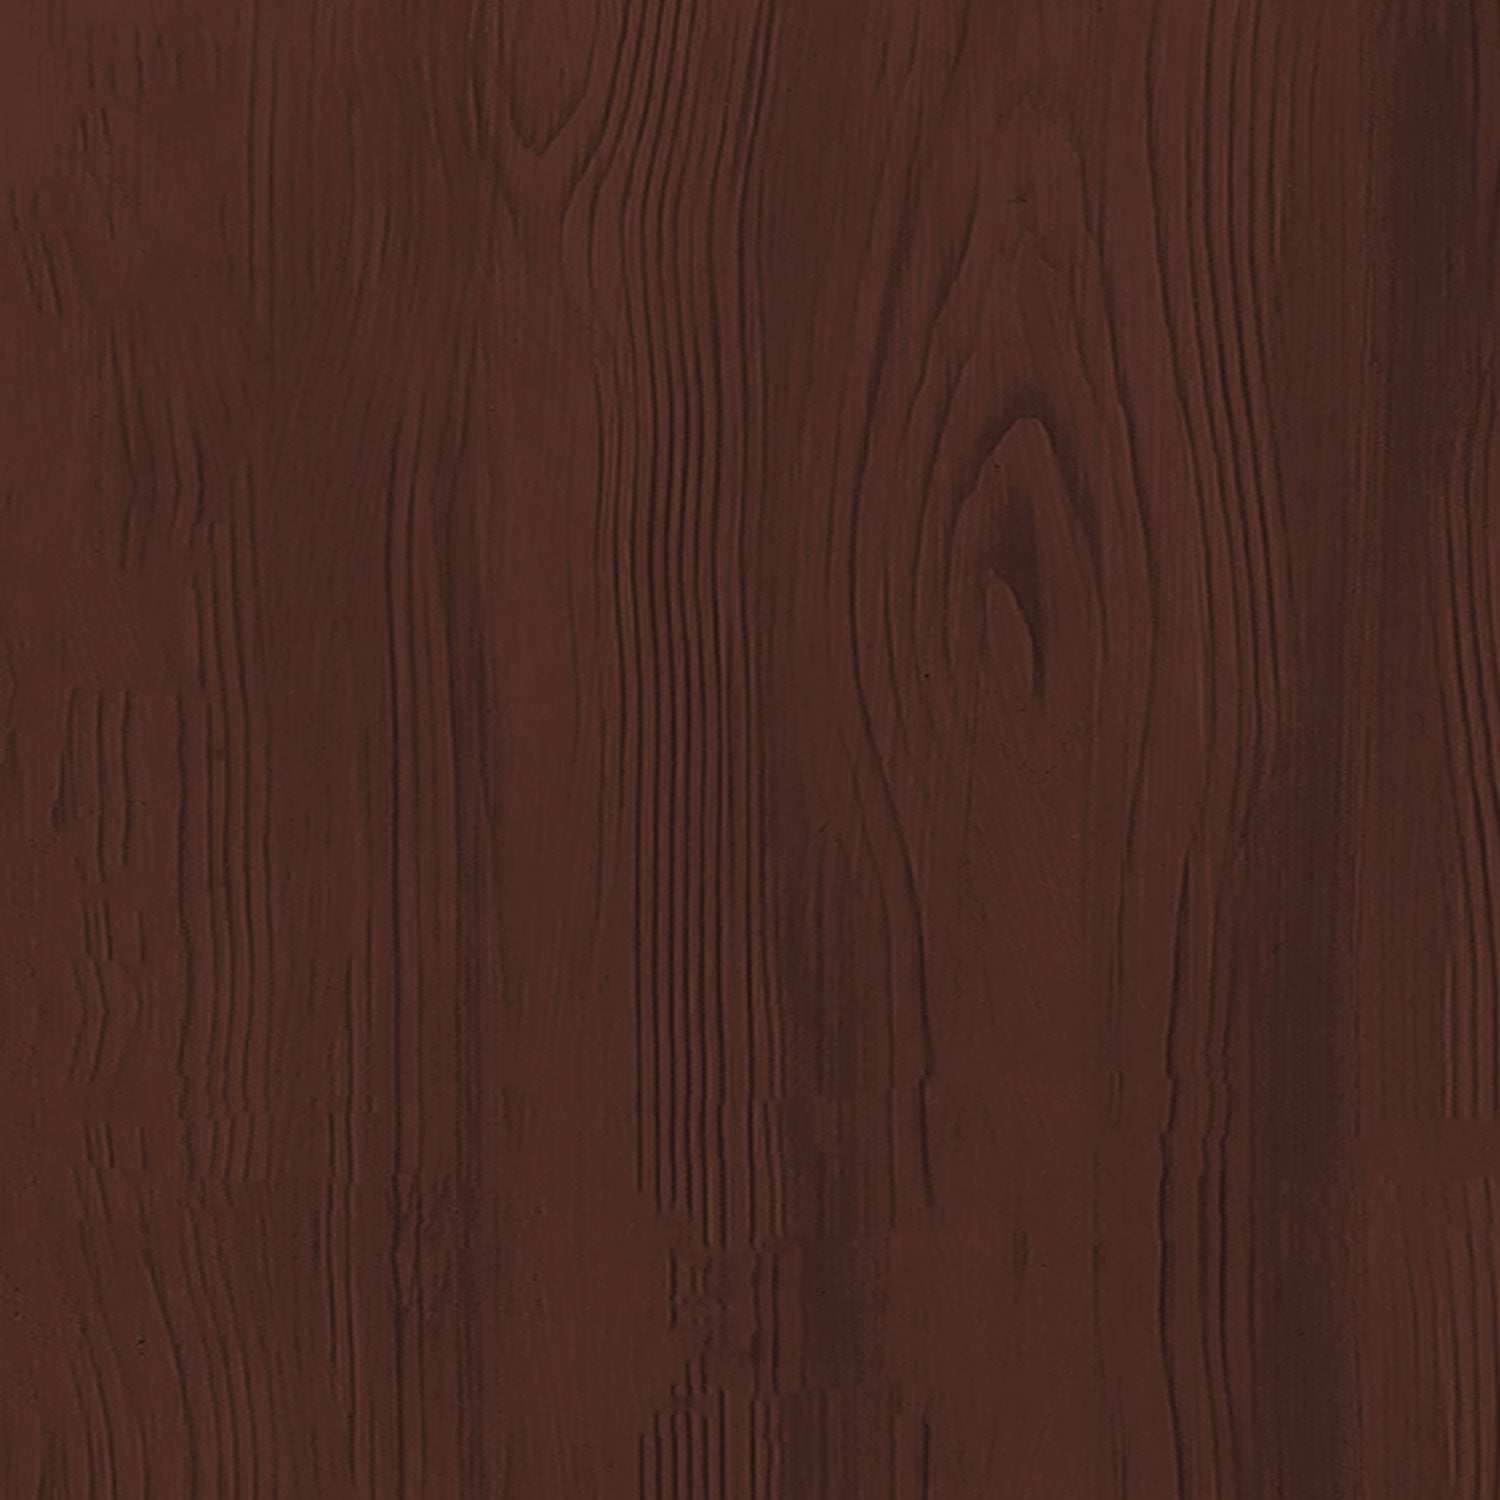 Multi-purpose Wood'n Kit (Med) - Red Mahogany